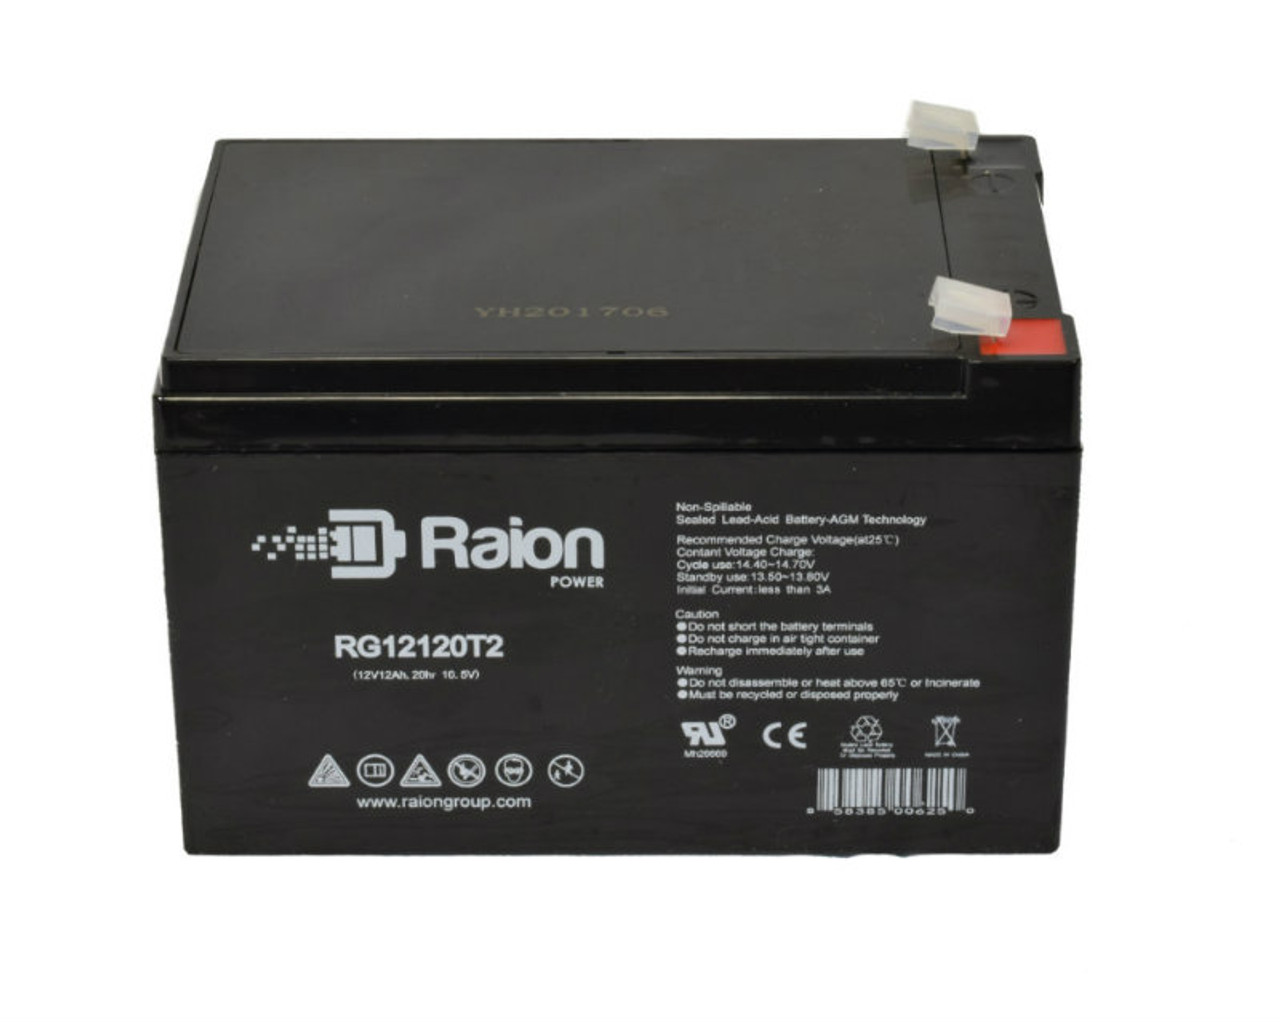 Raion Power RG12120T2 SLA Battery for X-treme X-151